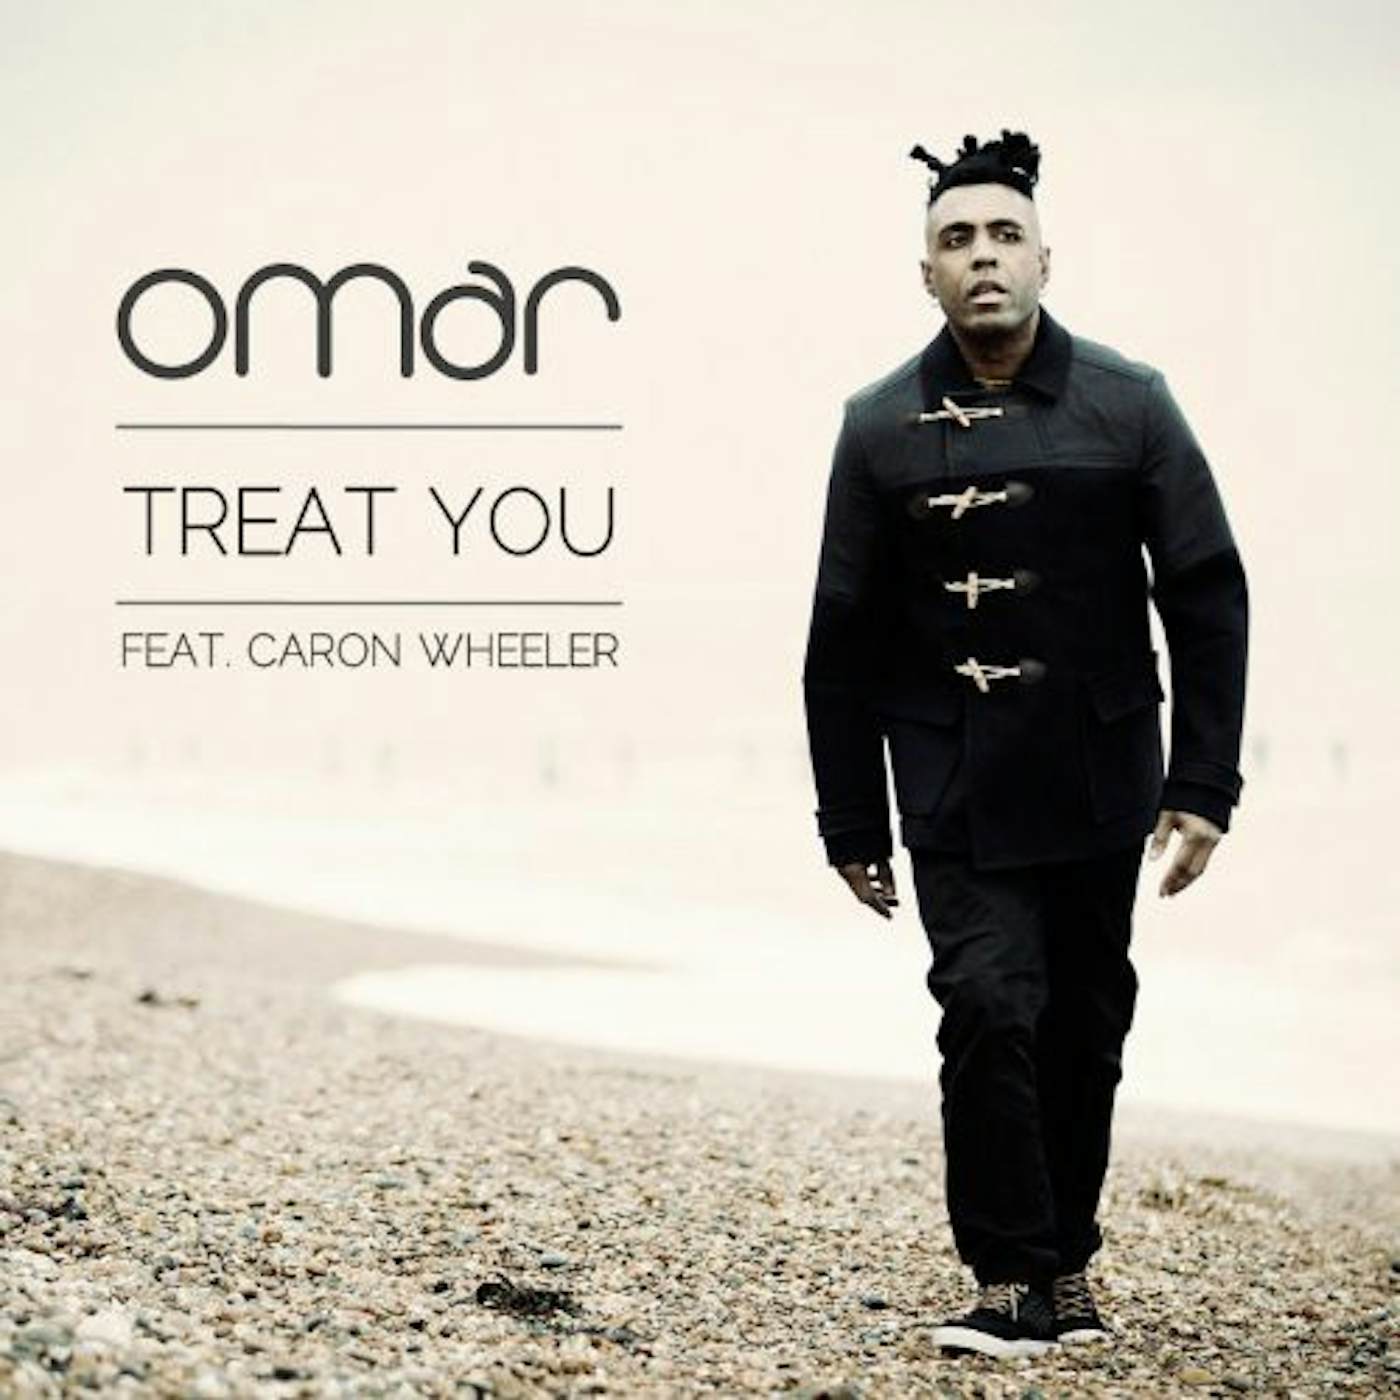 Omar Treat You Vinyl Record